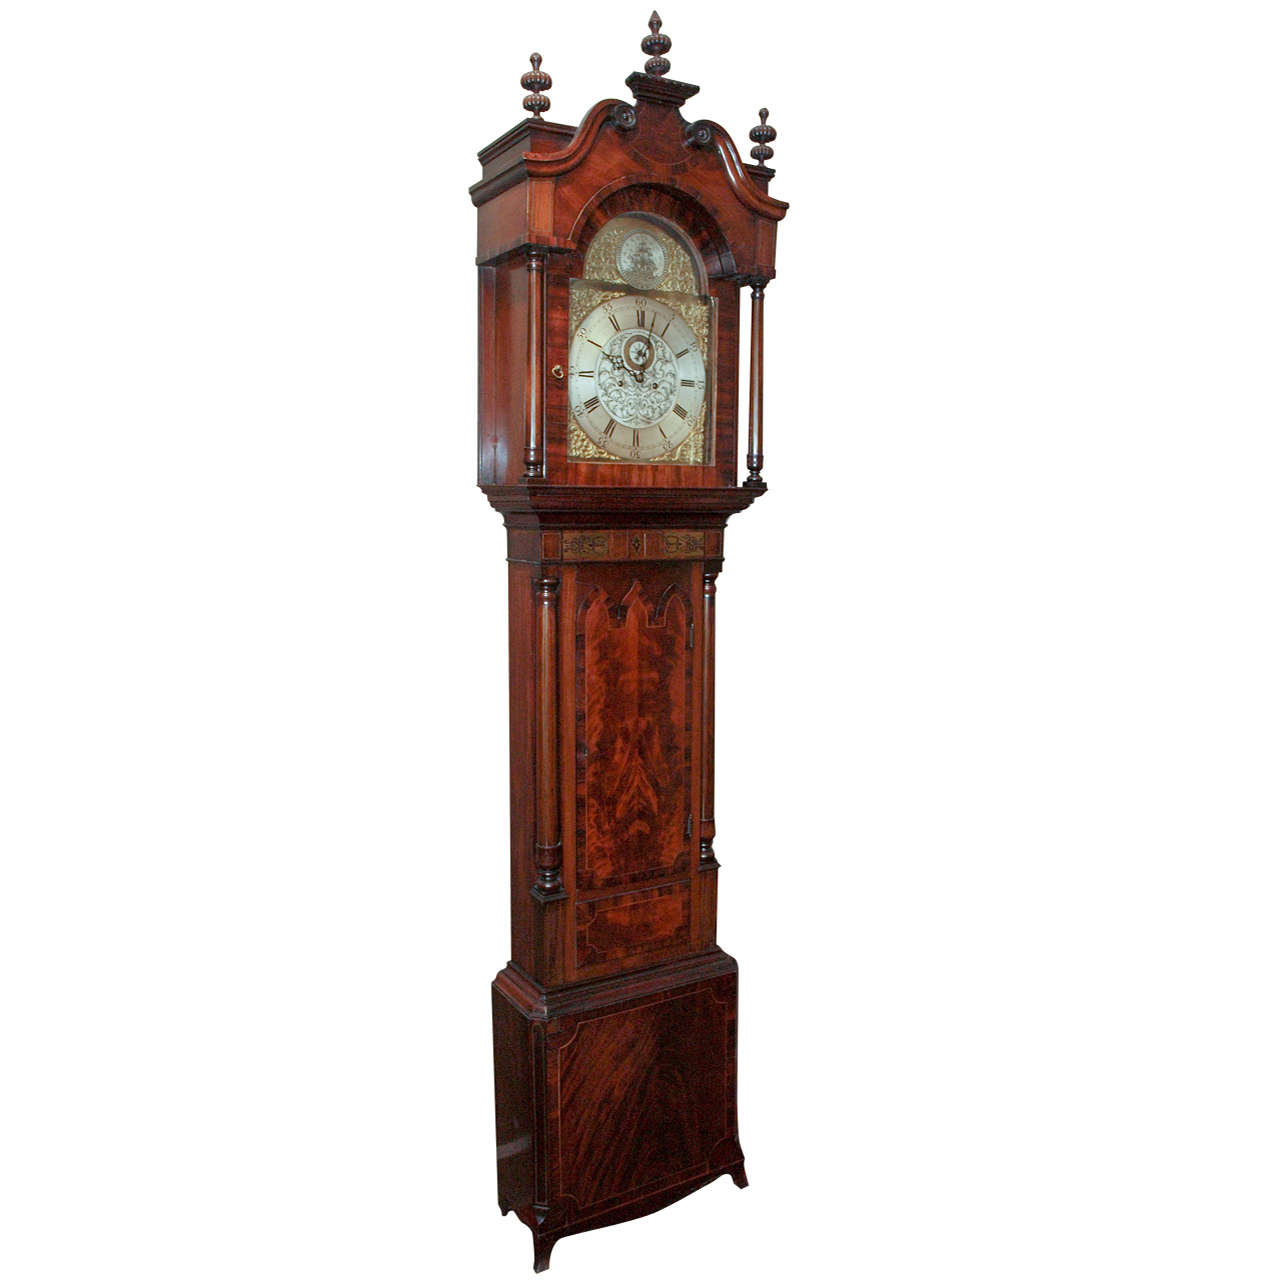 Antique English Northern Lancastershire Grandfather Clock